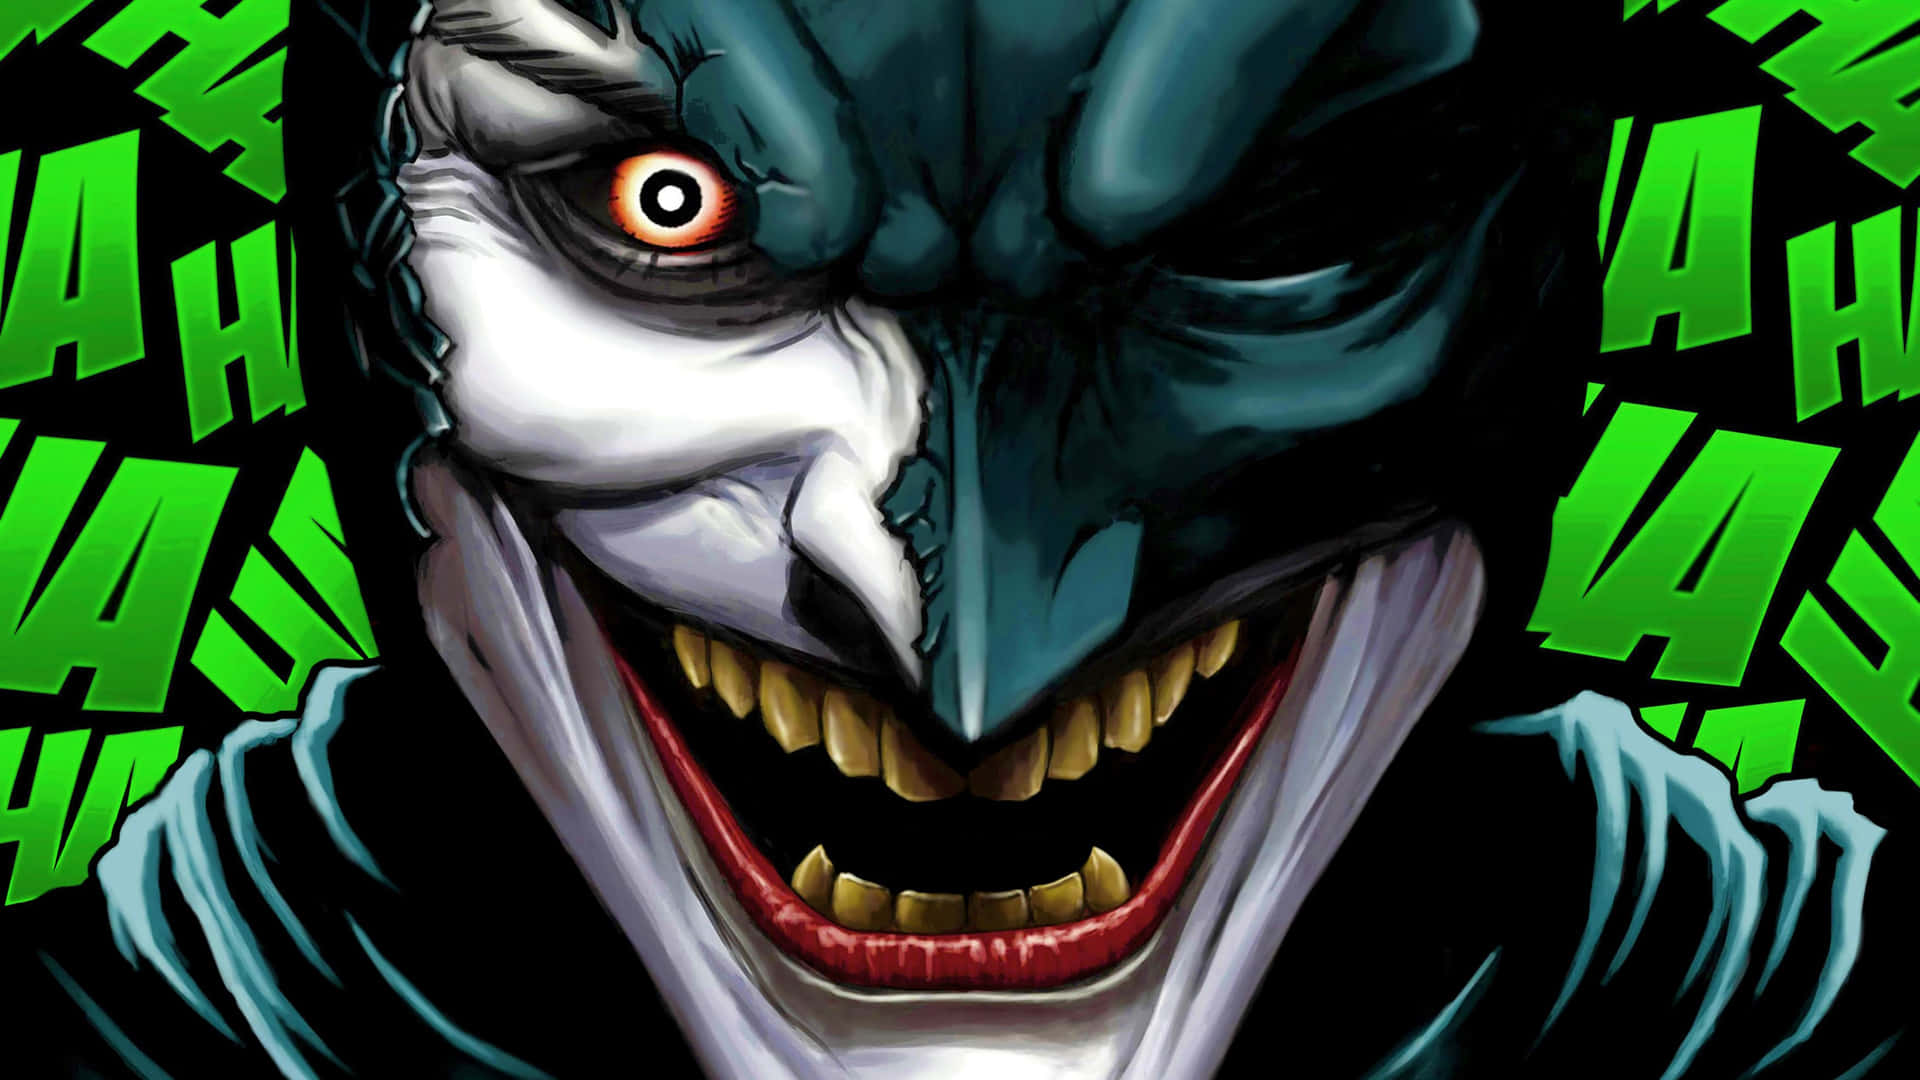 "The Joker: The Clown Prince of Crime." Wallpaper